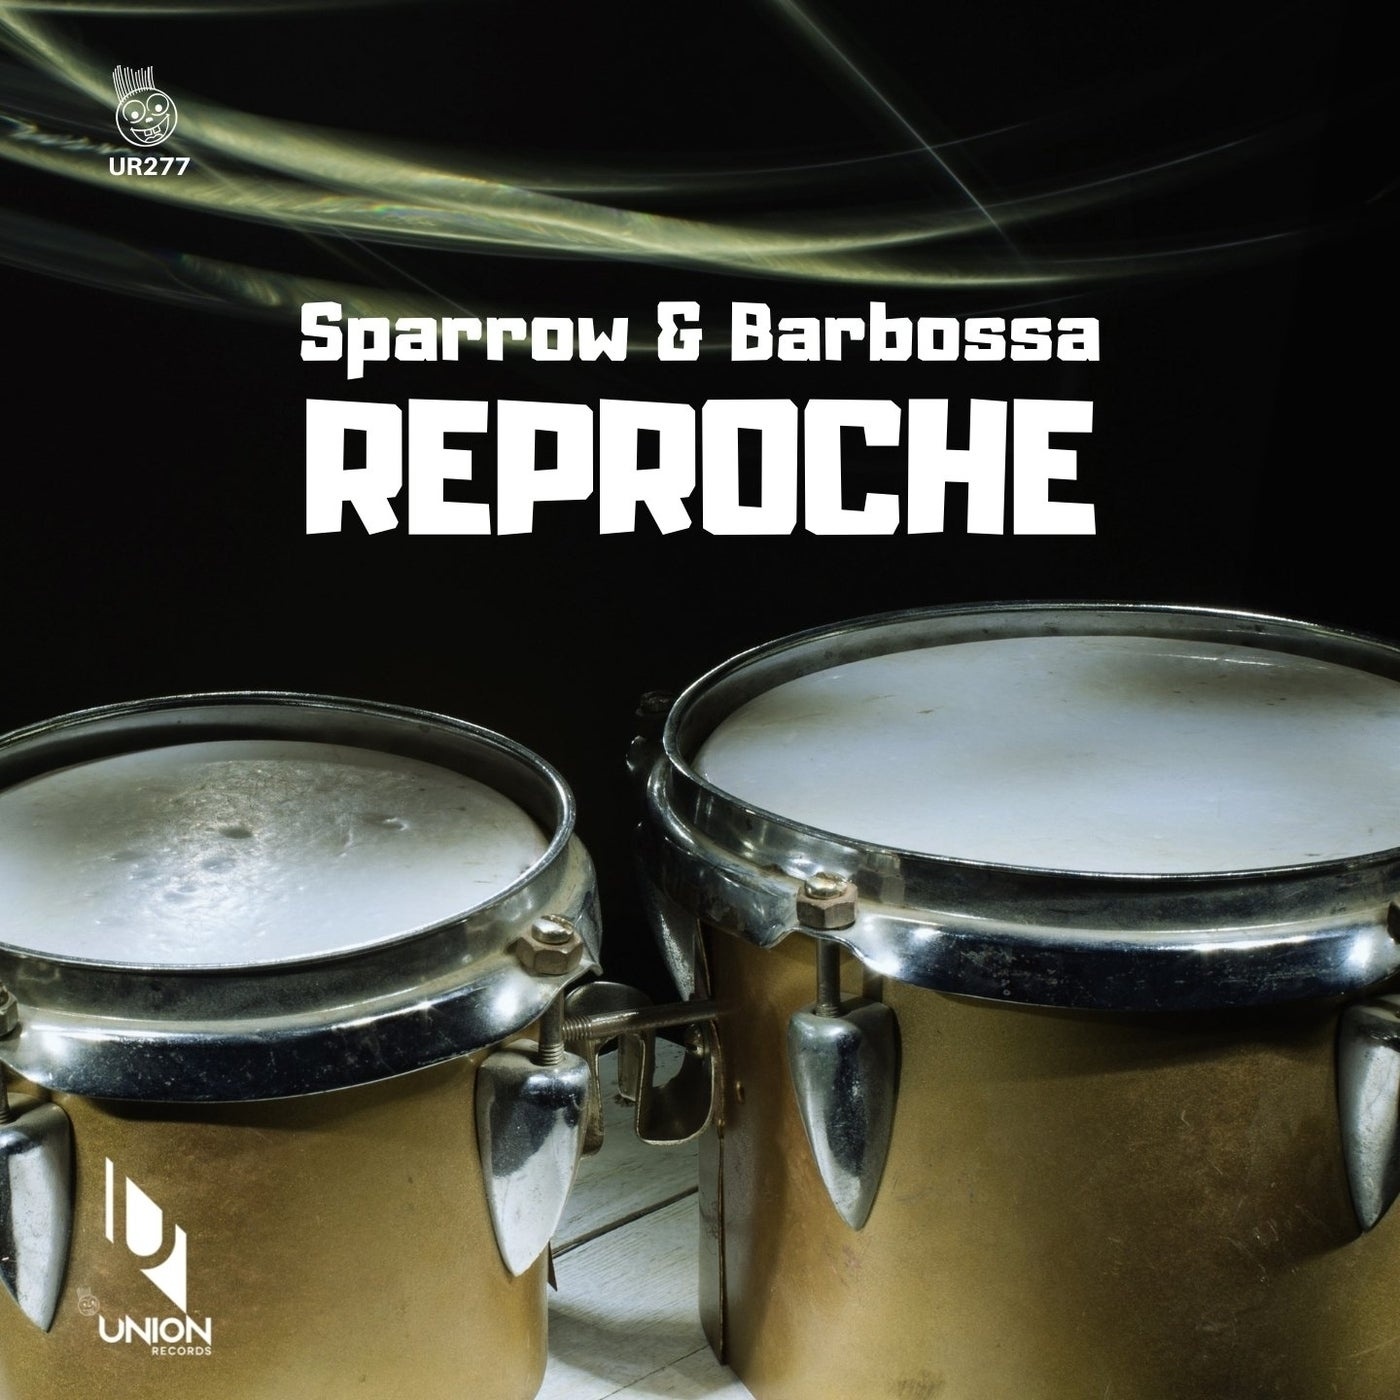 Sparrow & Barbossa - Reproche [UR277]